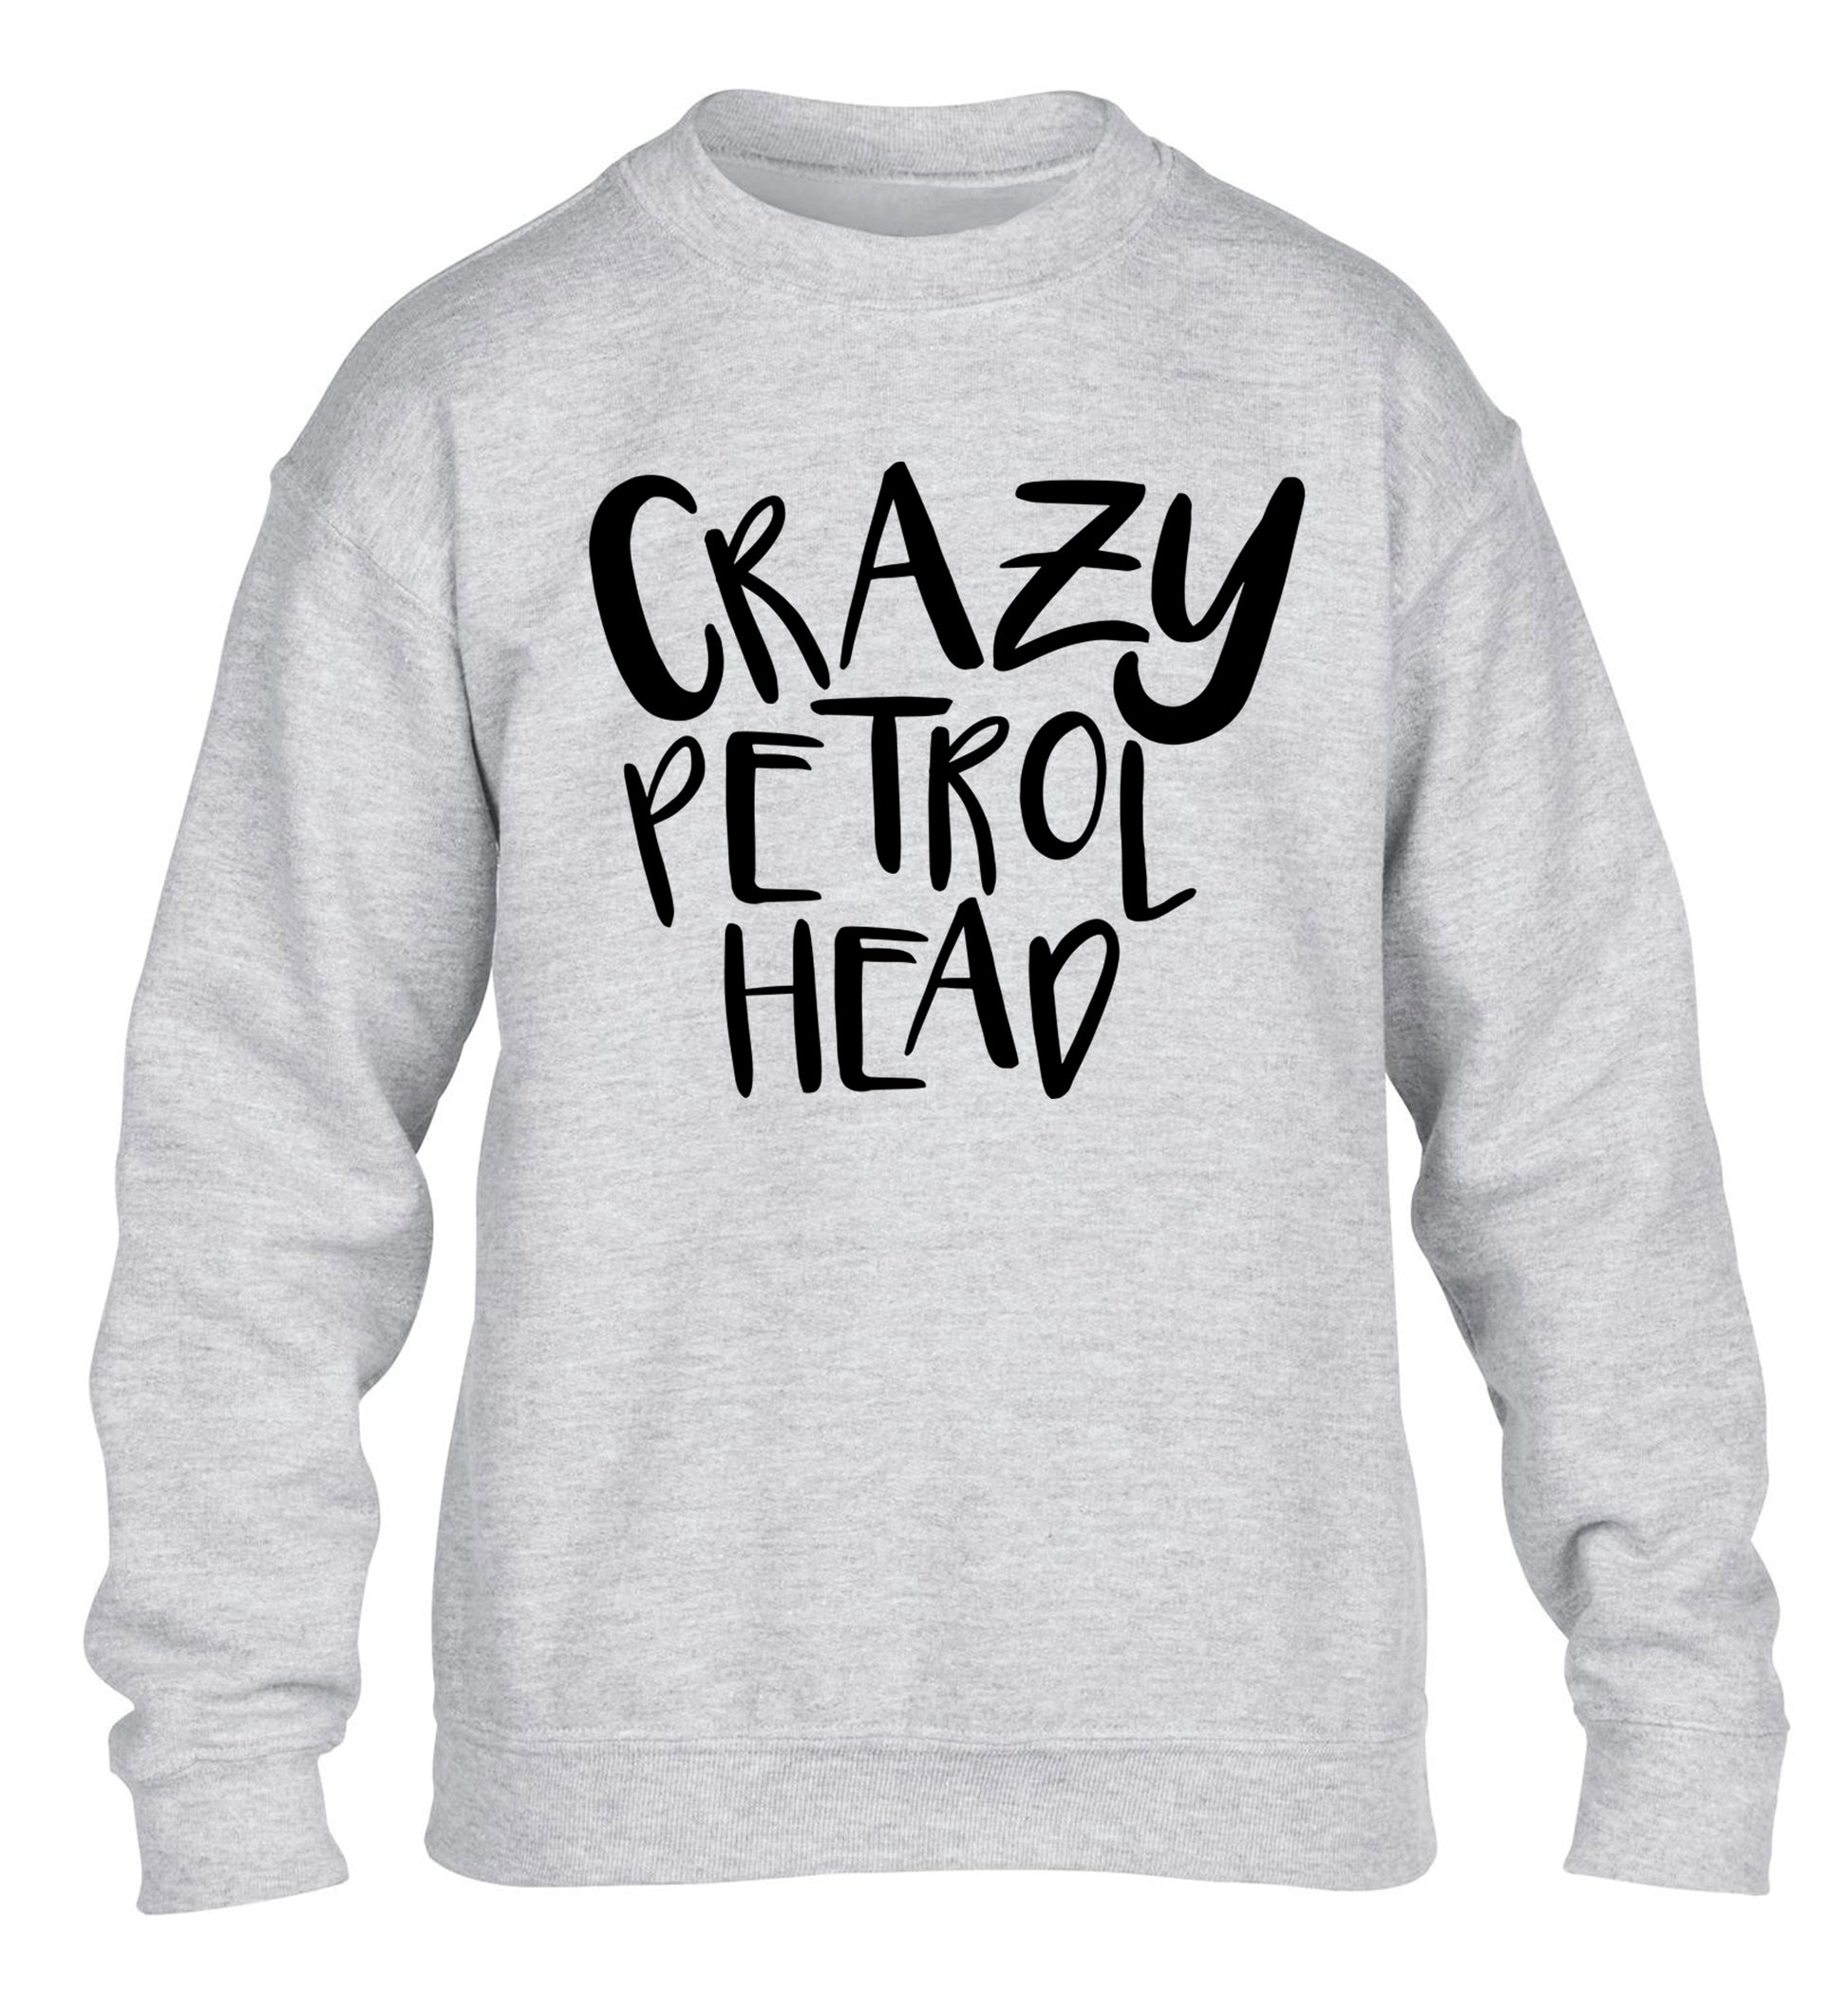 Crazy petrol head children's grey sweater 12-13 Years